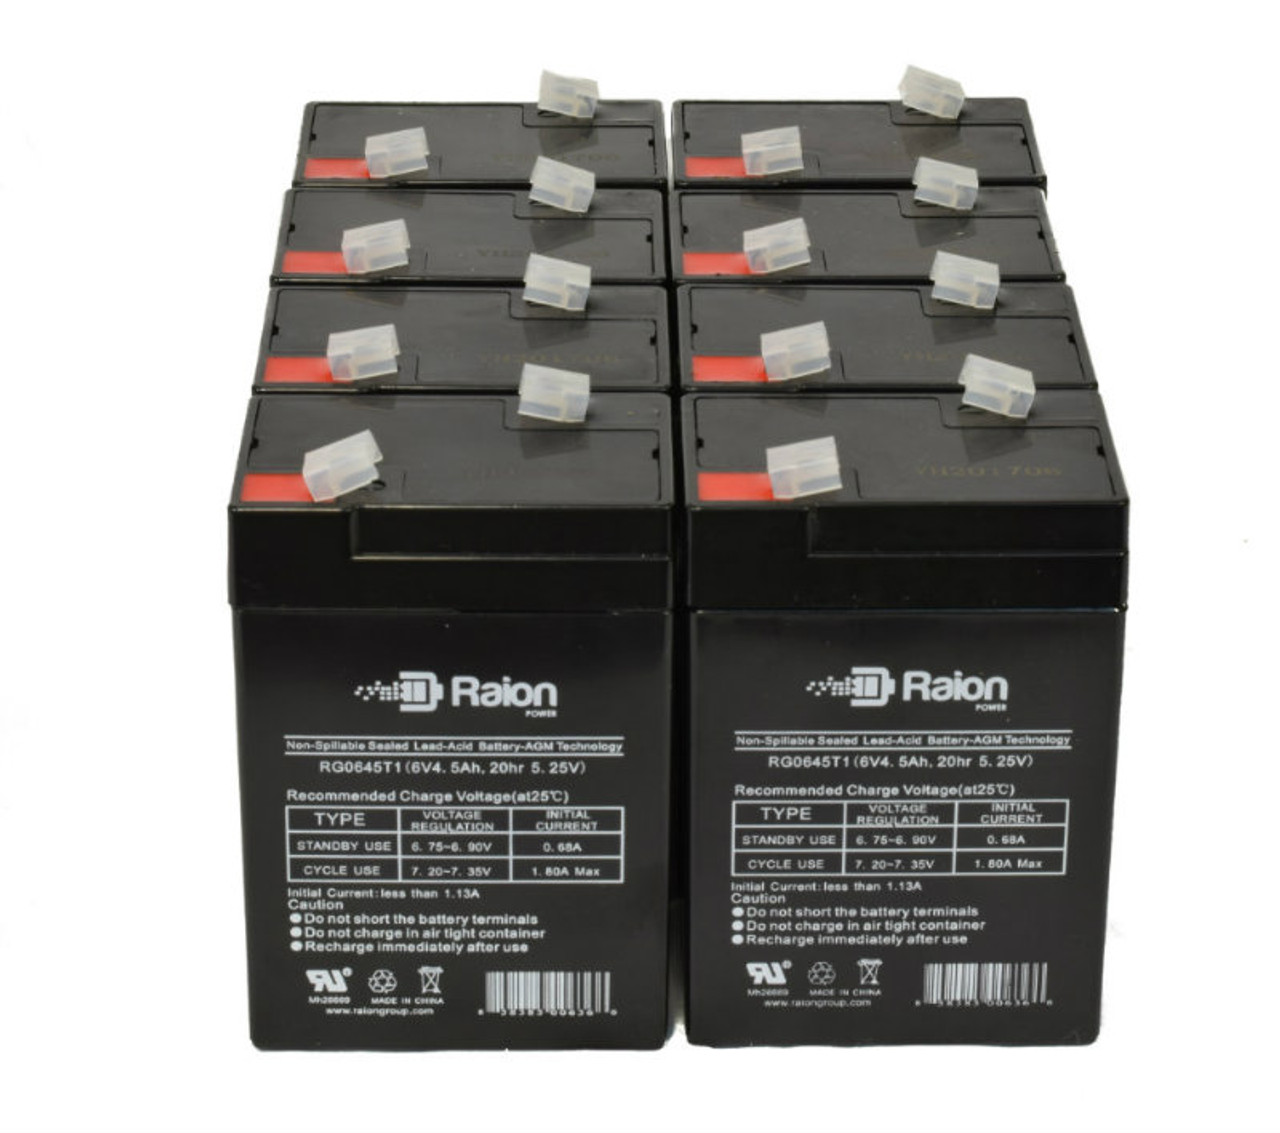 Raion Power 6V 4.5Ah Replacement Emergency Light Battery for Emergi-Lite JSM91 - 8 Pack